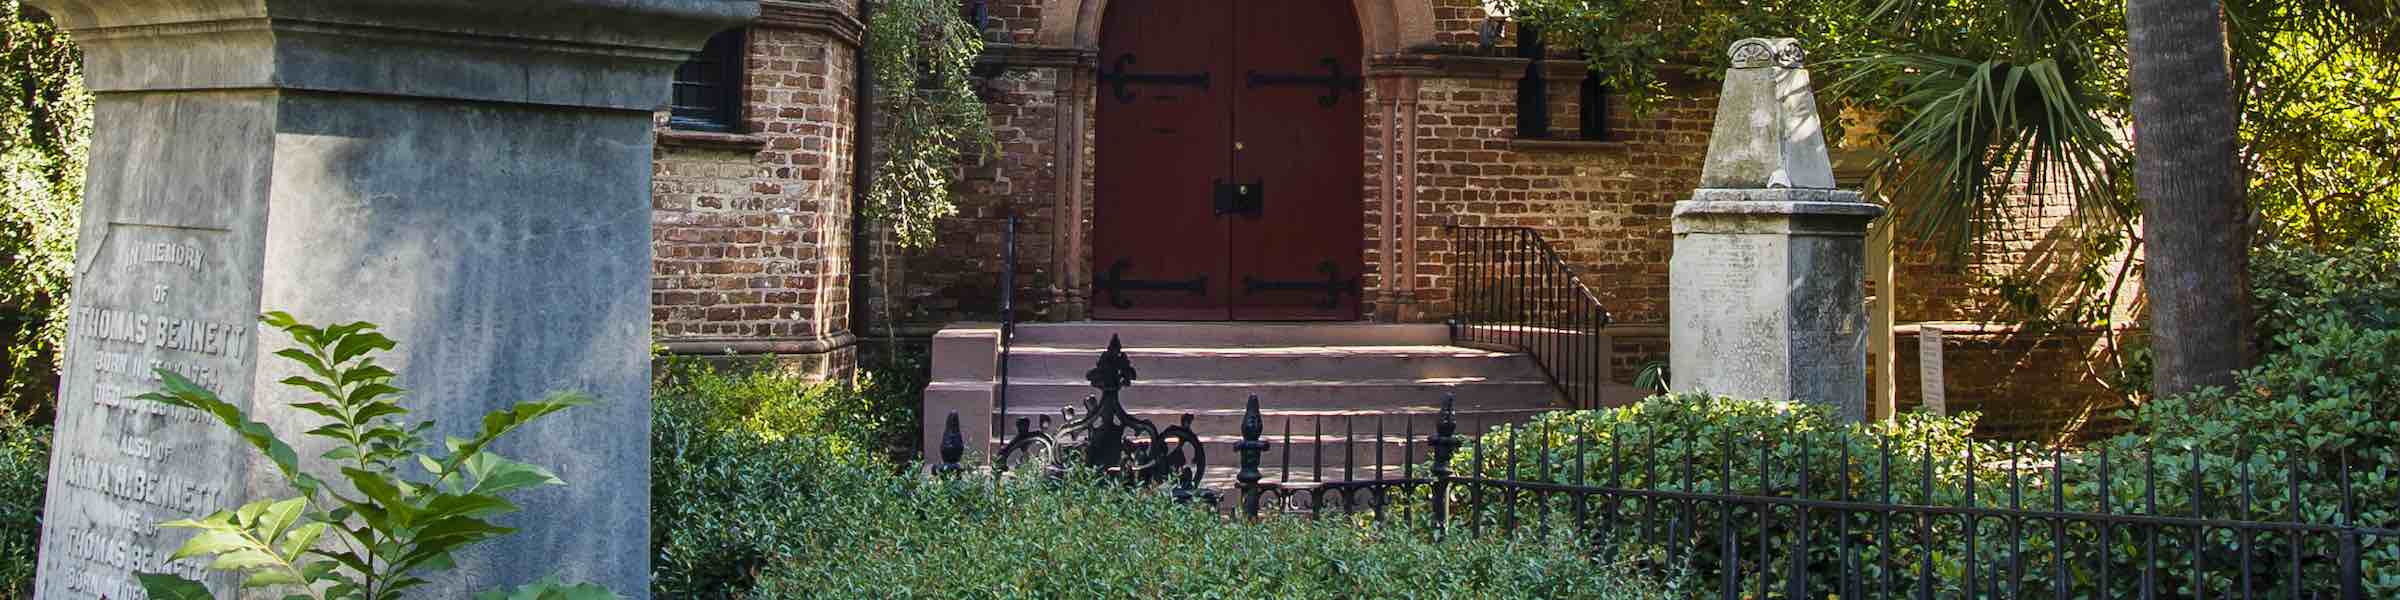 Gravestones in the graveyard of Charleston's Circular Congregational Church.